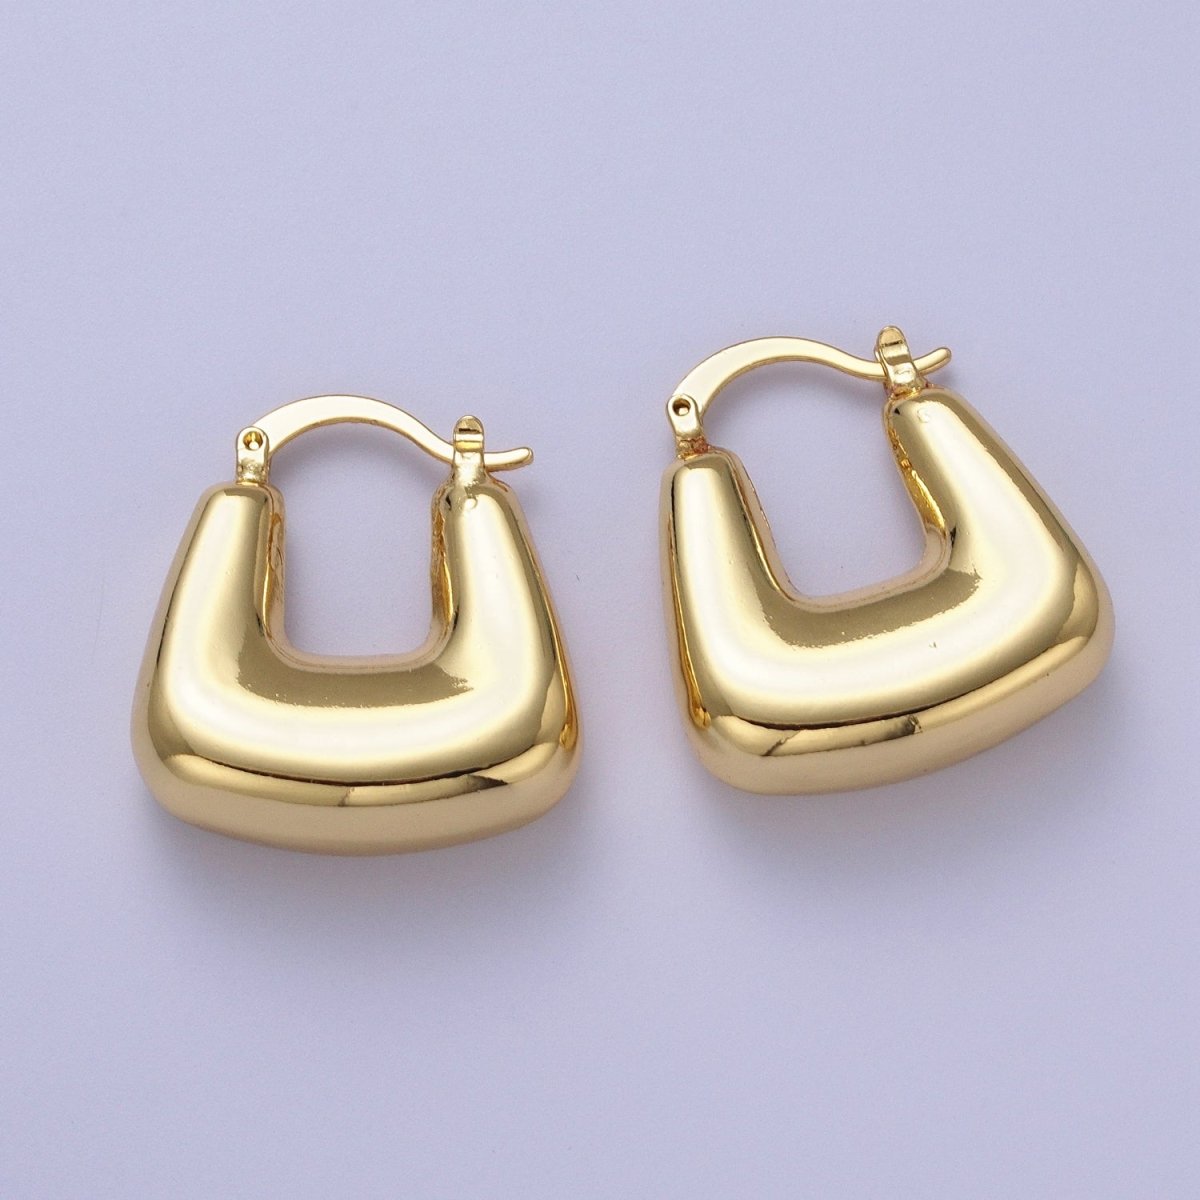 Chubby Boxy U-Shaped Latch Earrings in Gold & Silver | AB041 AB042 - DLUXCA